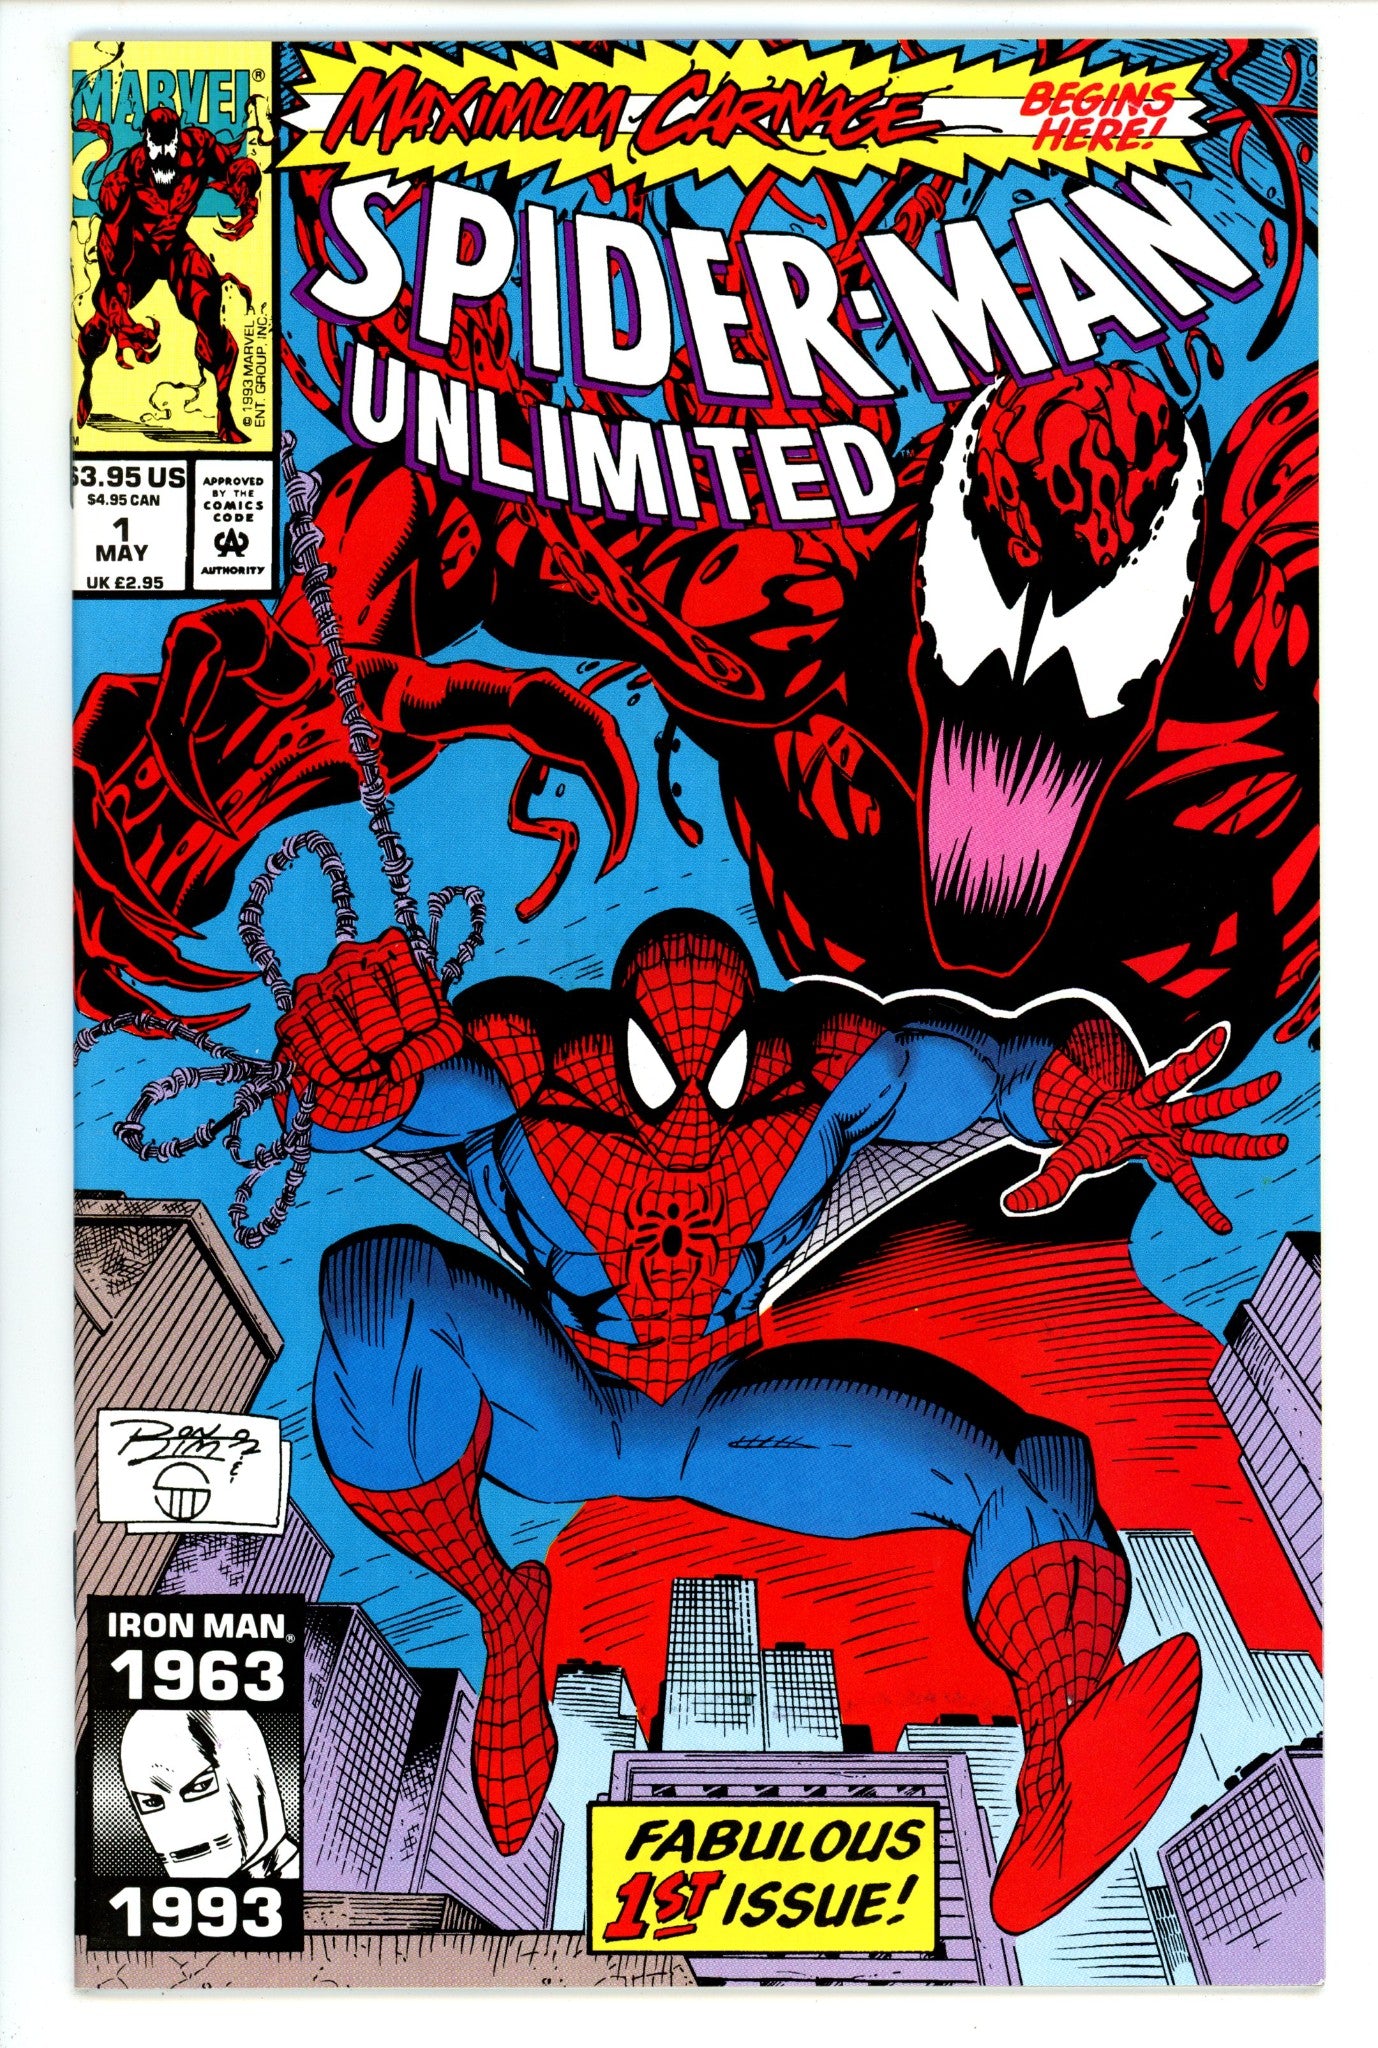 Spider-Man Unlimited Vol 1 1 NM- (9.2) (1993) 